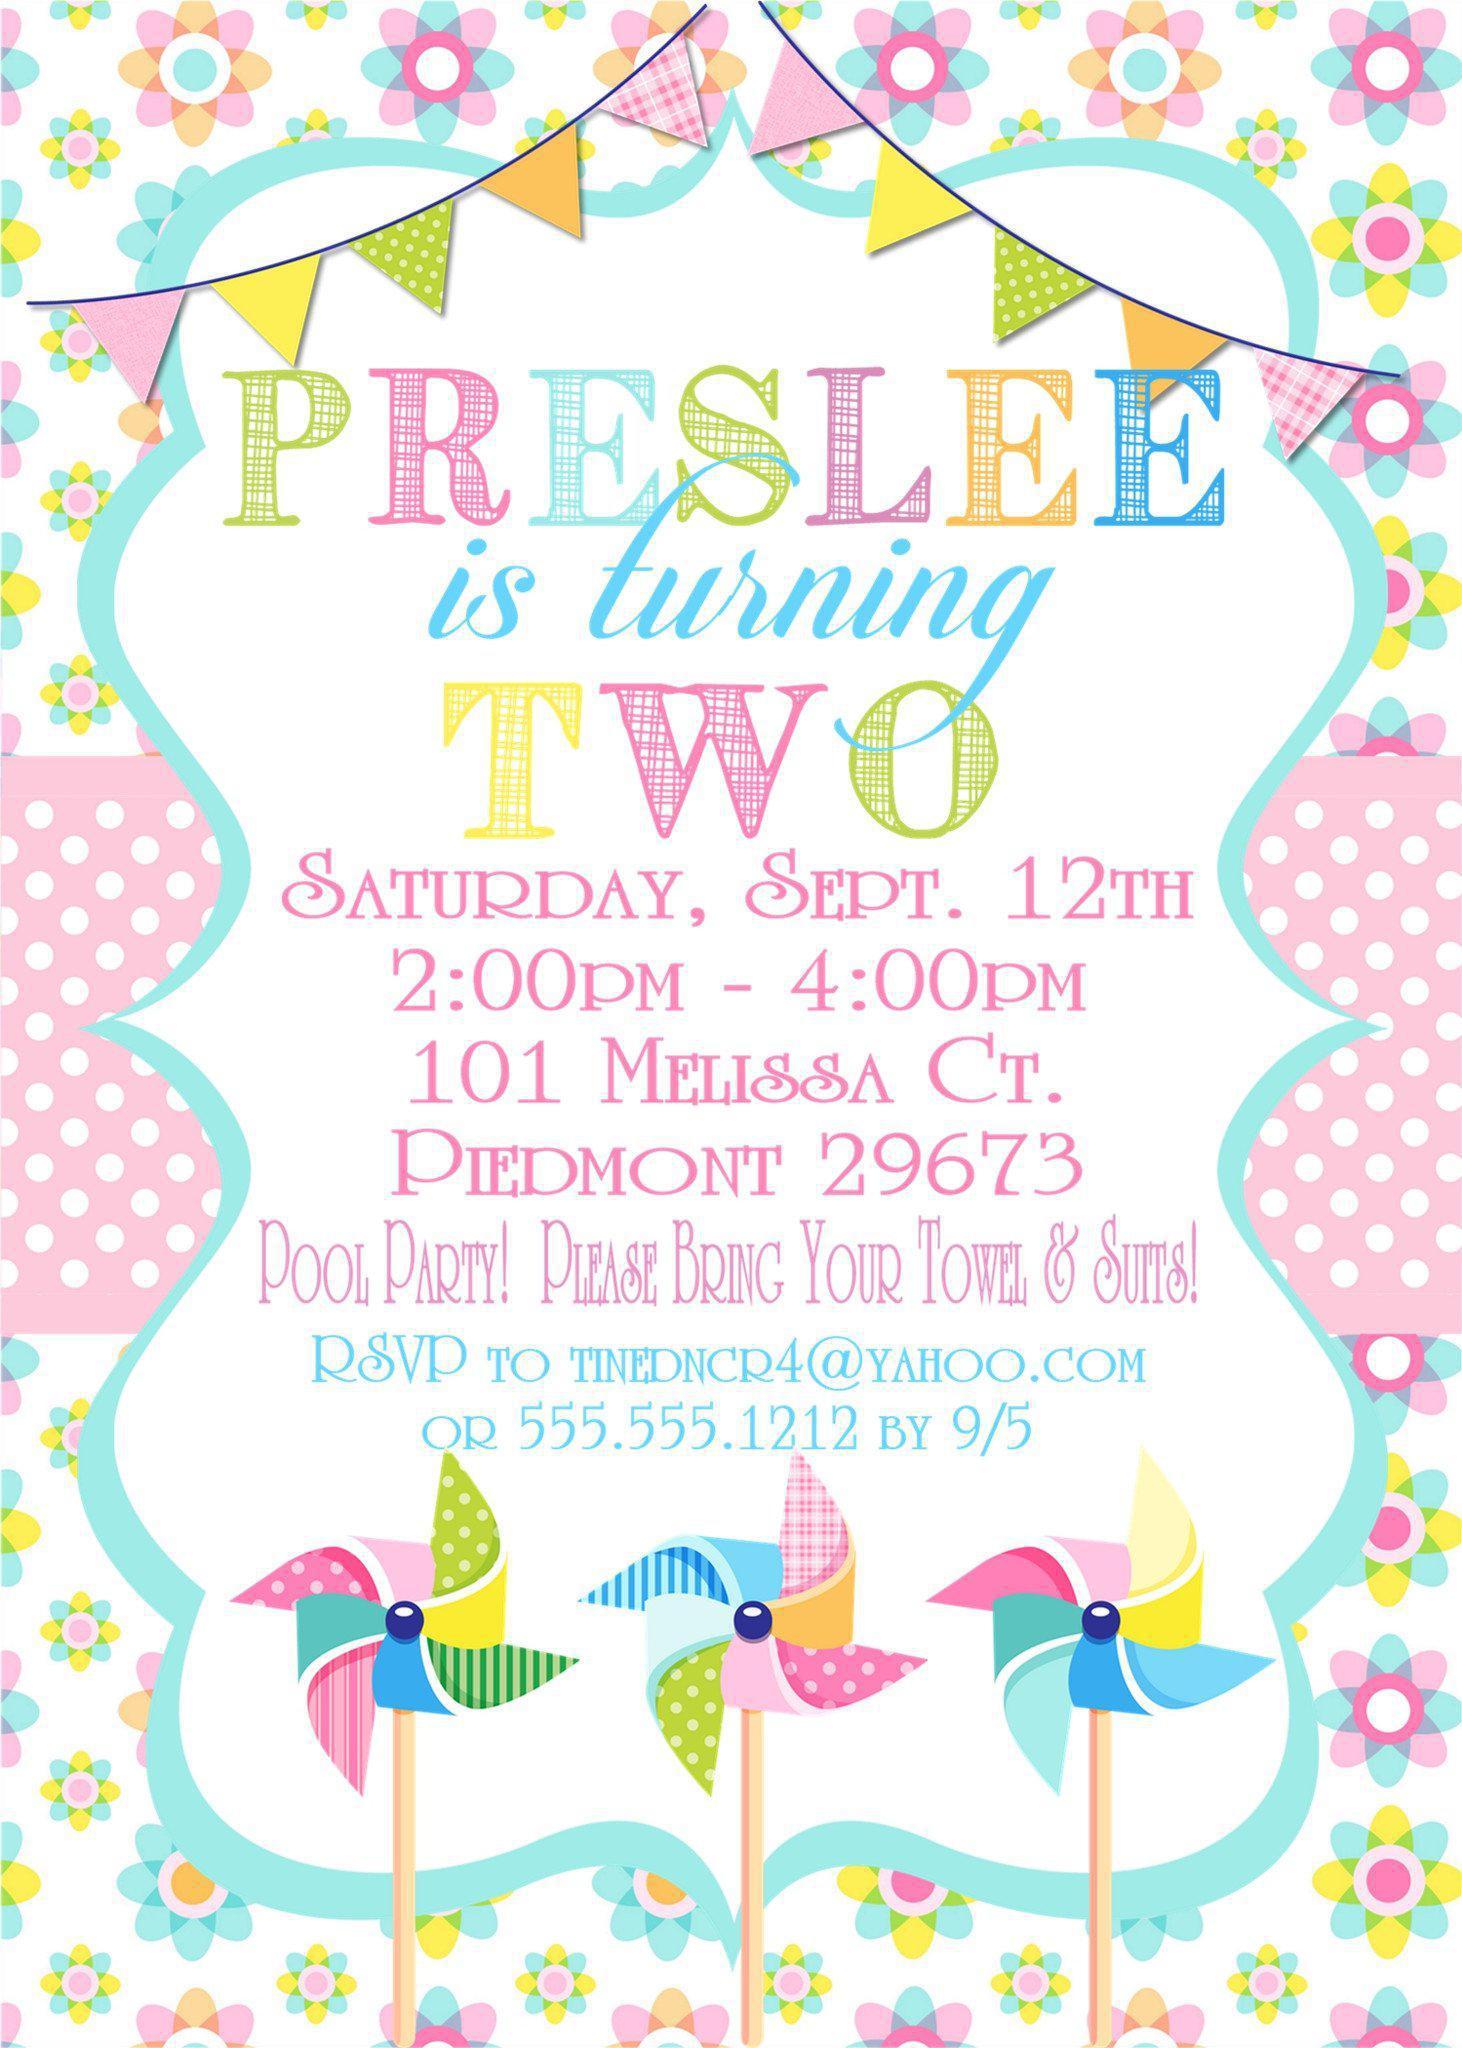 Pinwheel Birthday Party Invitations